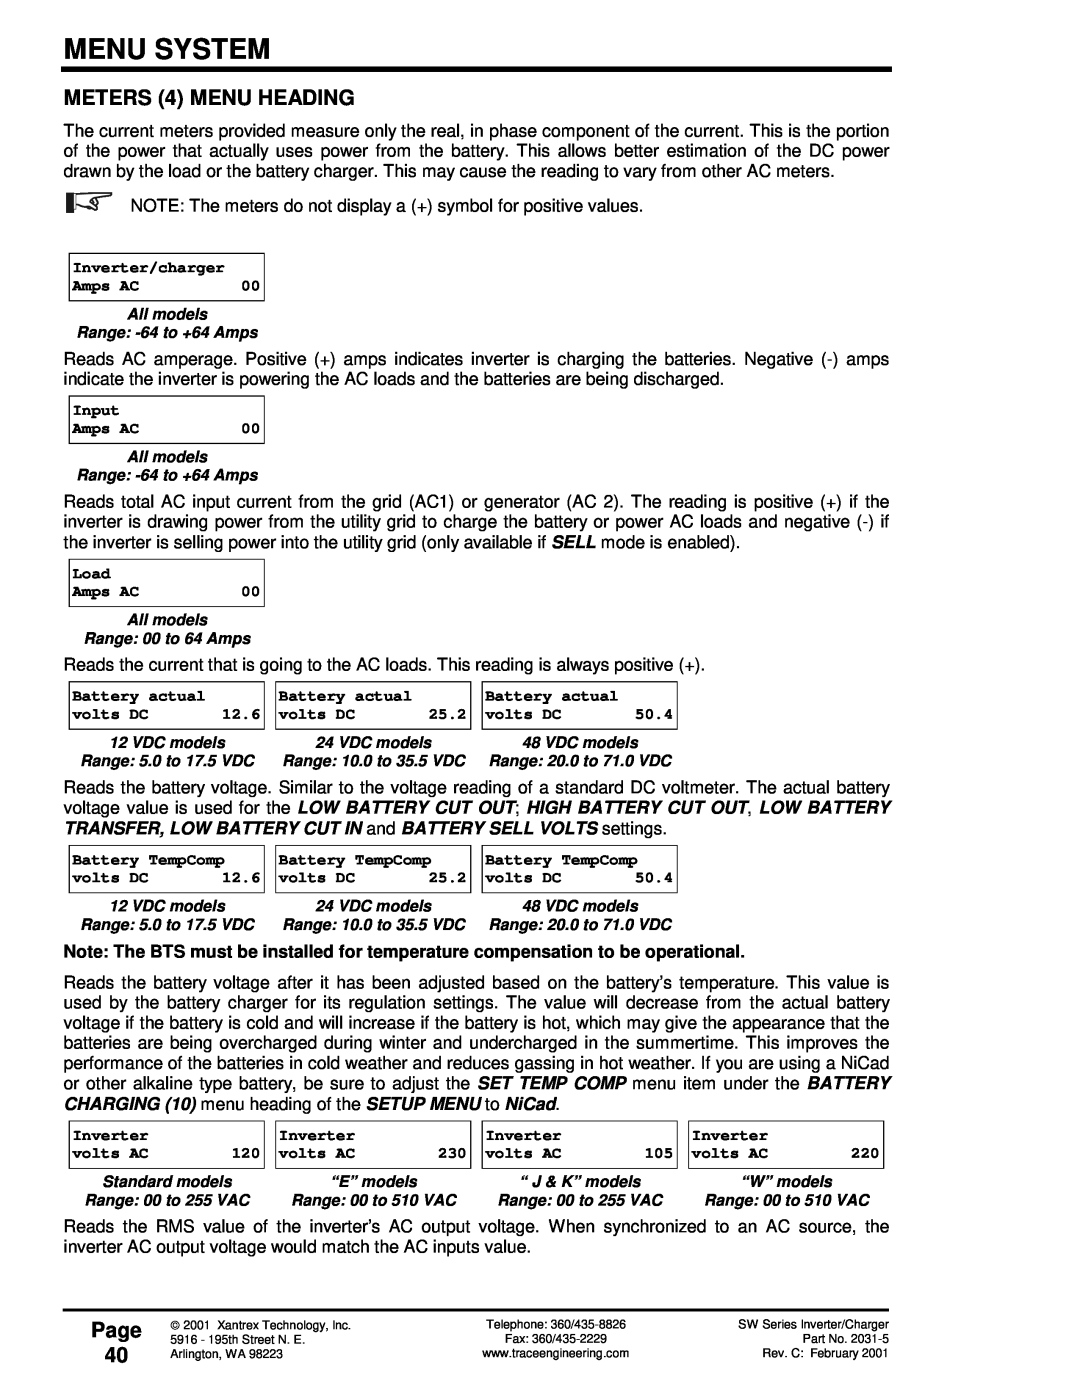 Xantrex Technology SW Series owner manual METERS 4 MENU HEADING, Page 40, Menu System 